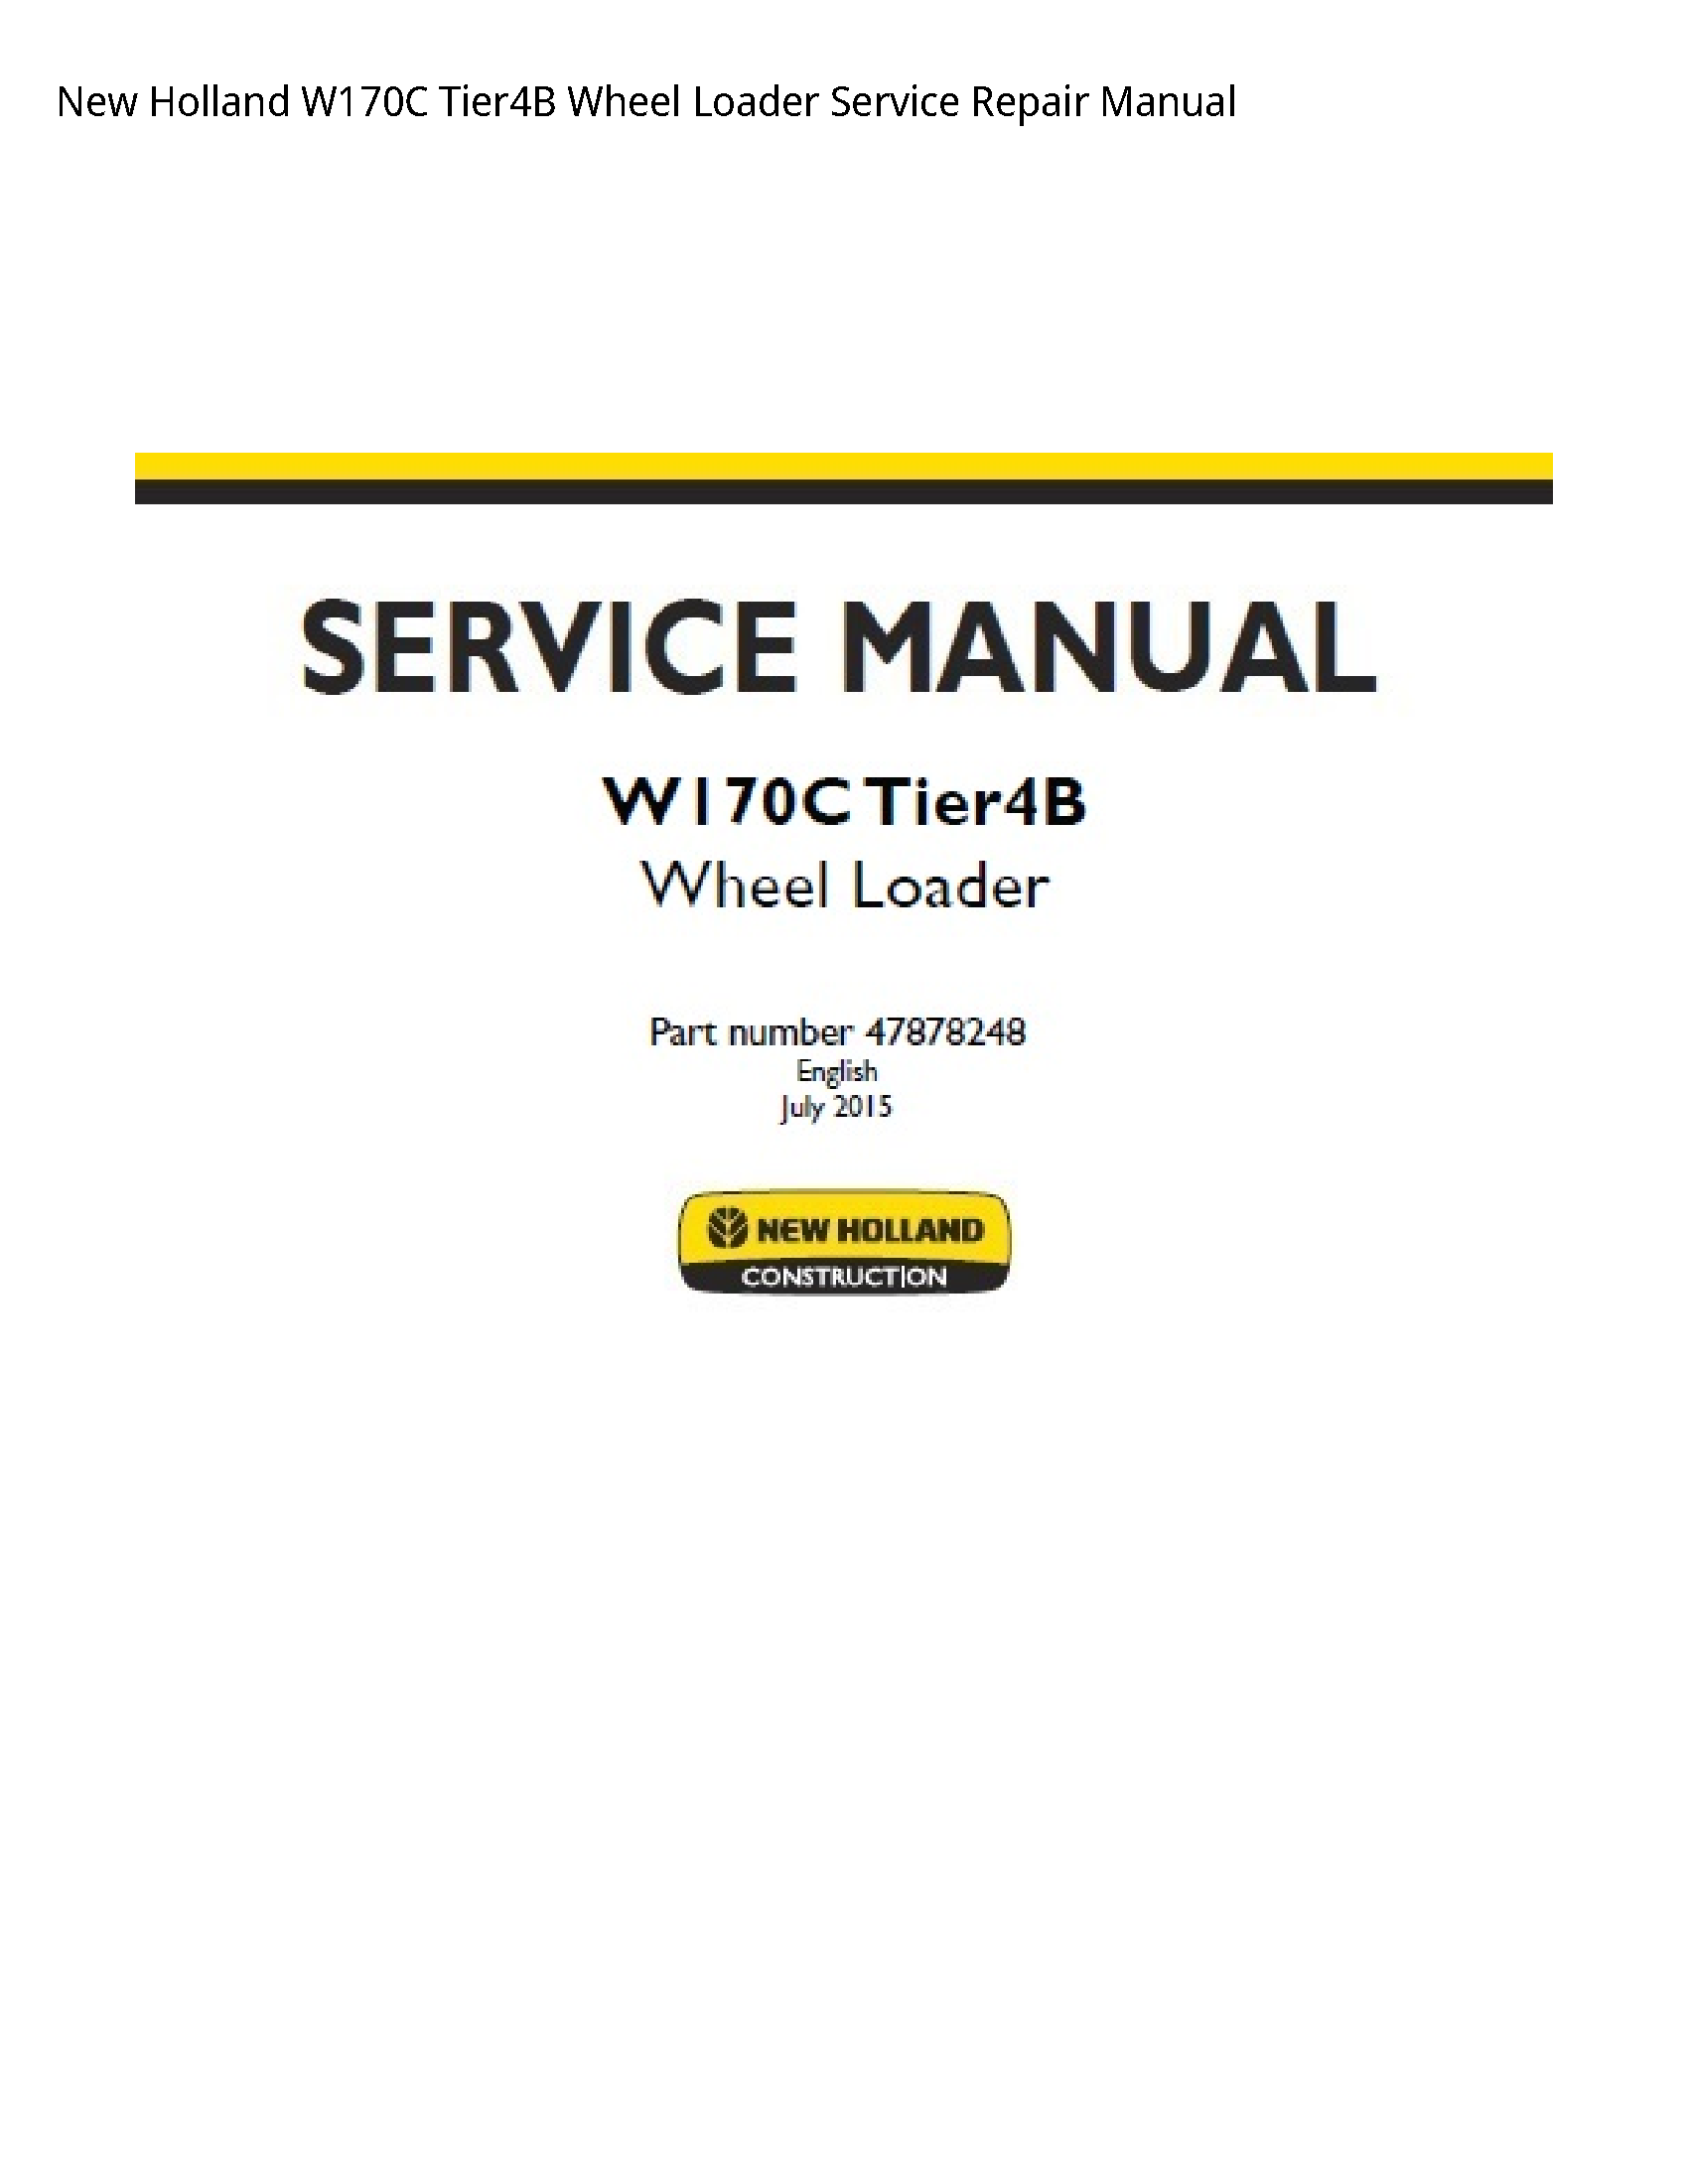 New Holland W170C Wheel Loader manual